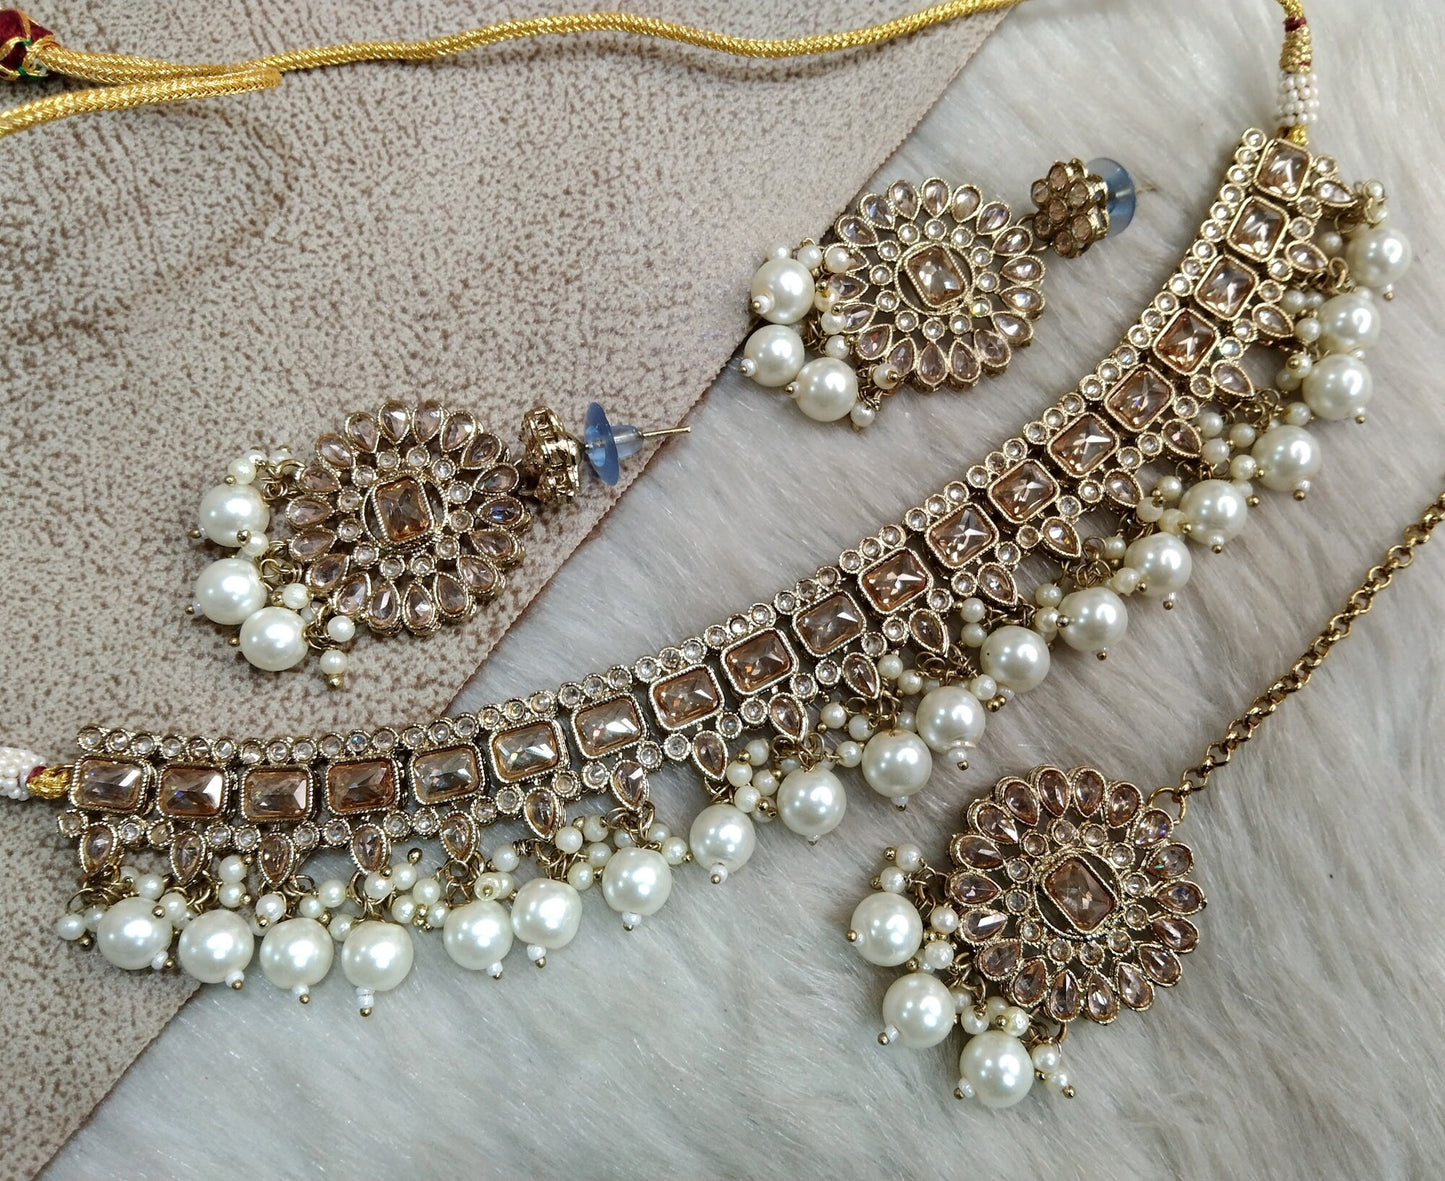 Indian jewellery Choker Set / Dark gold , blue choker set Jewellery set /Indian choker necklace set geelong